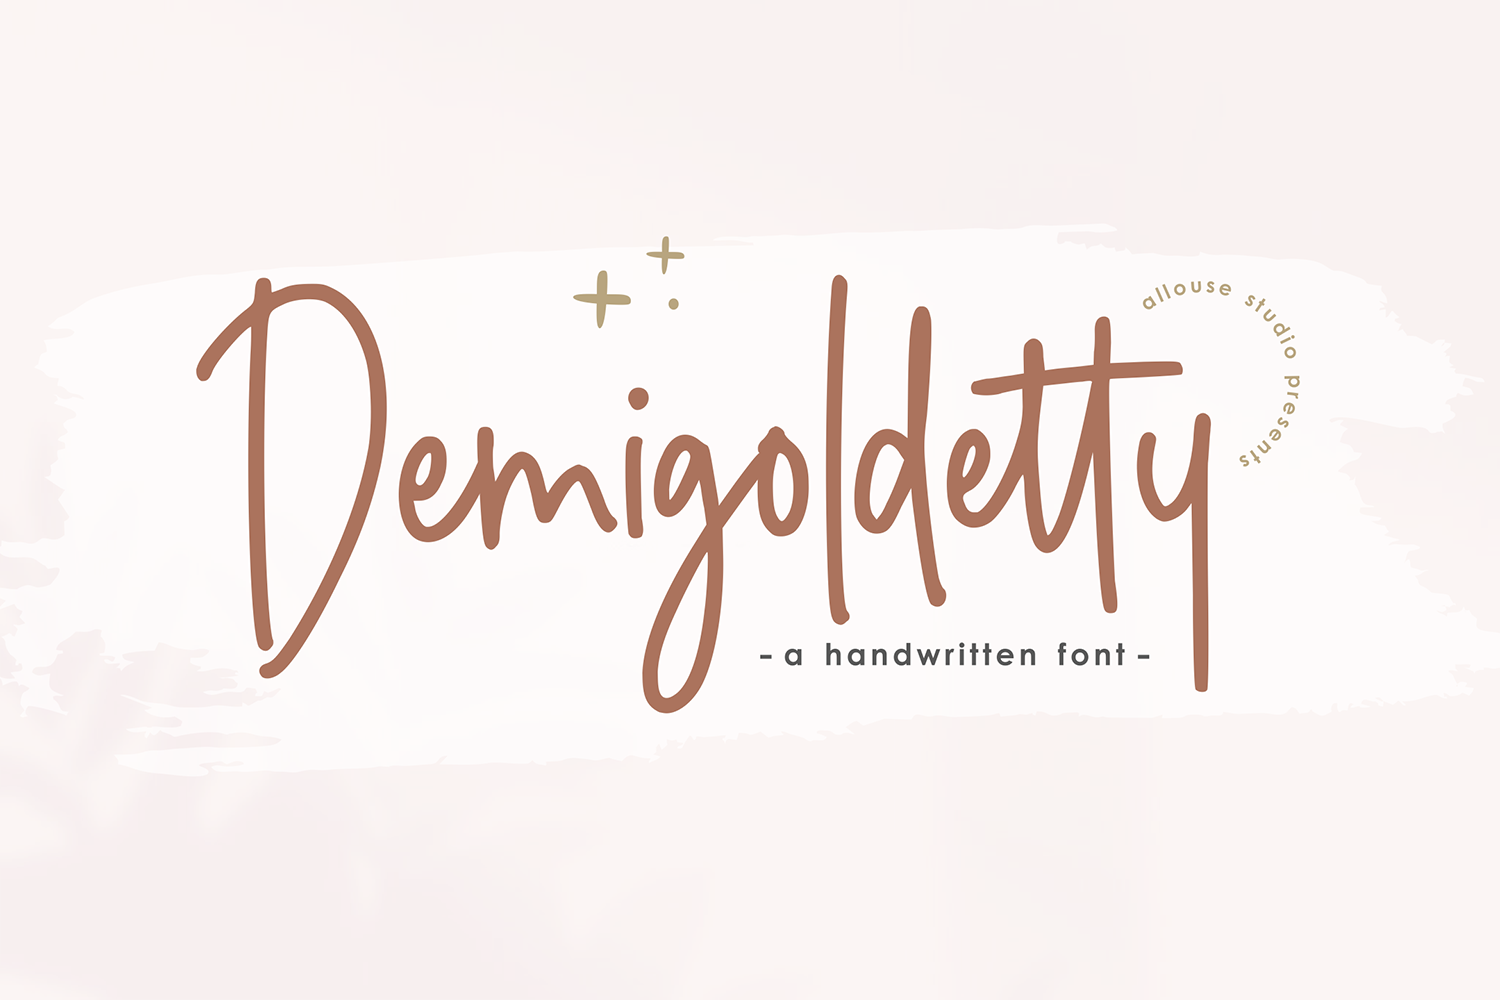 Demigoldetty Free Font